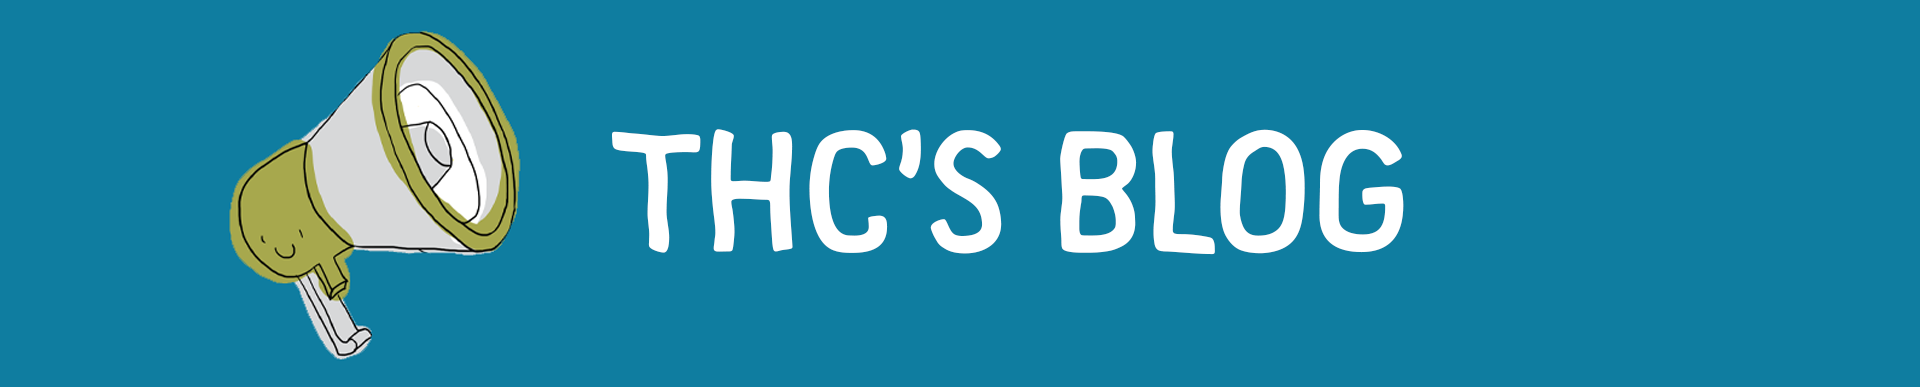 THC blog logo